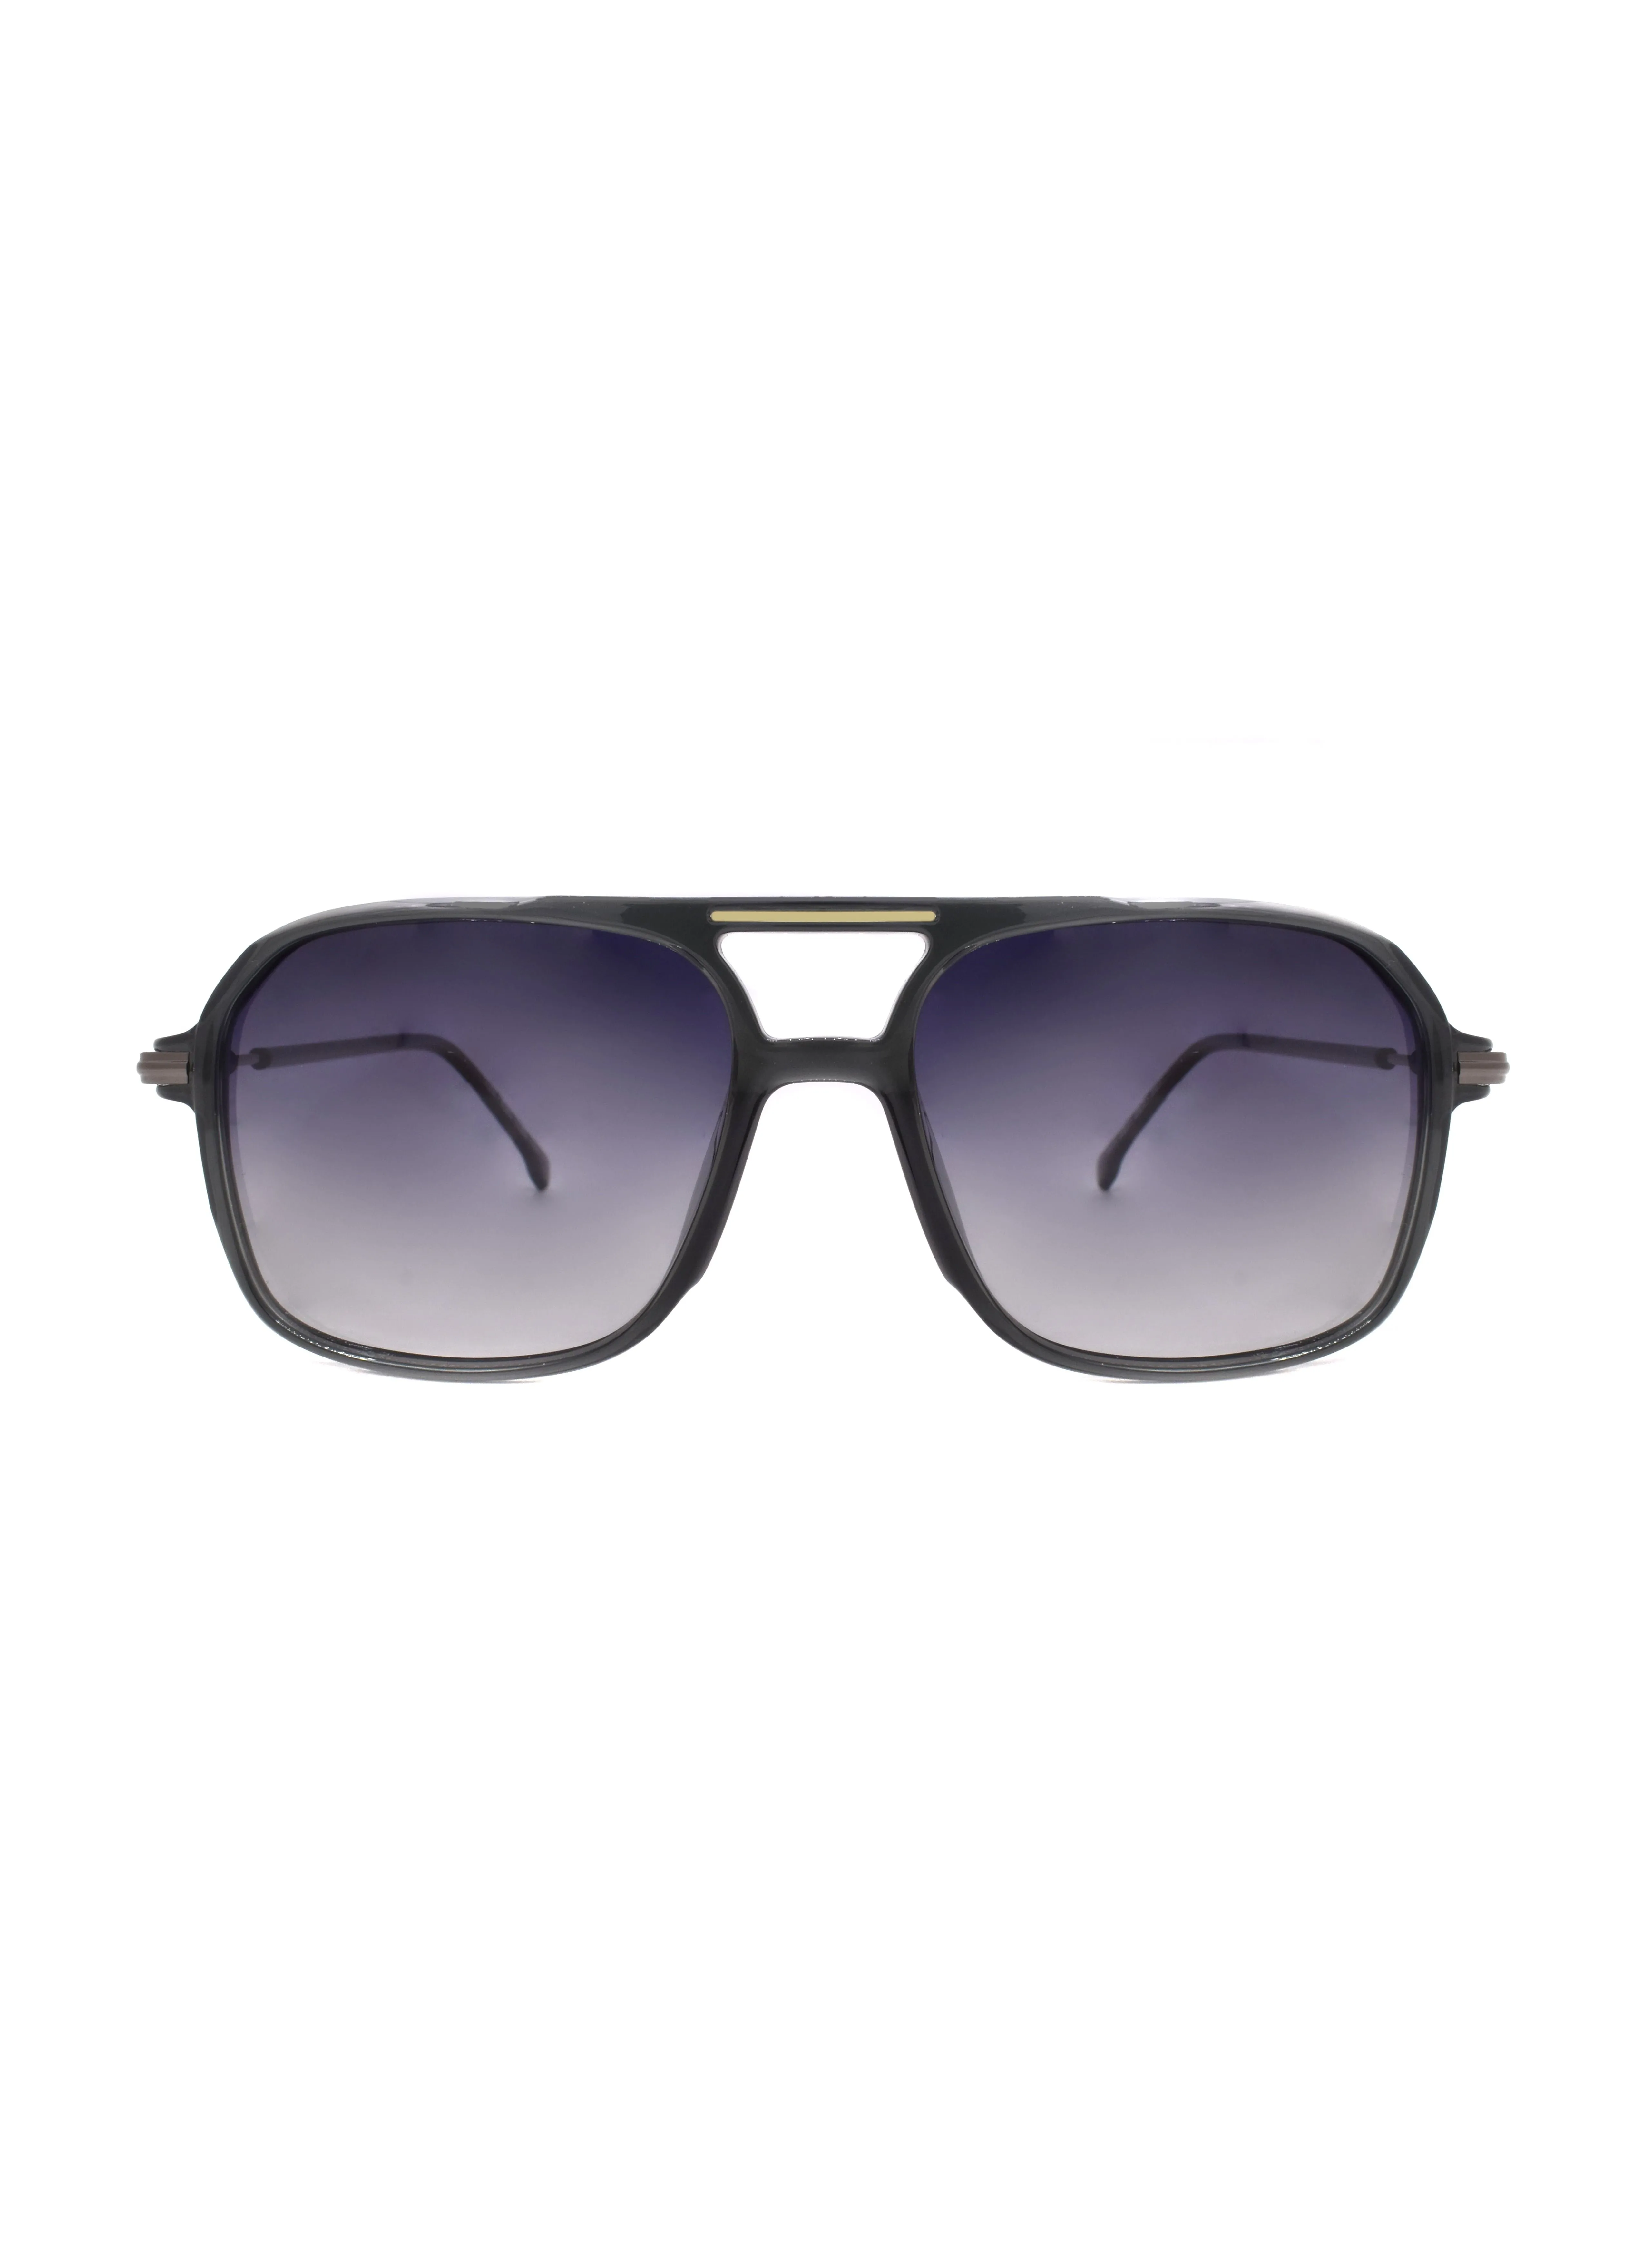 MEC Square/Aviator Shape Sunglasses 59993-C6